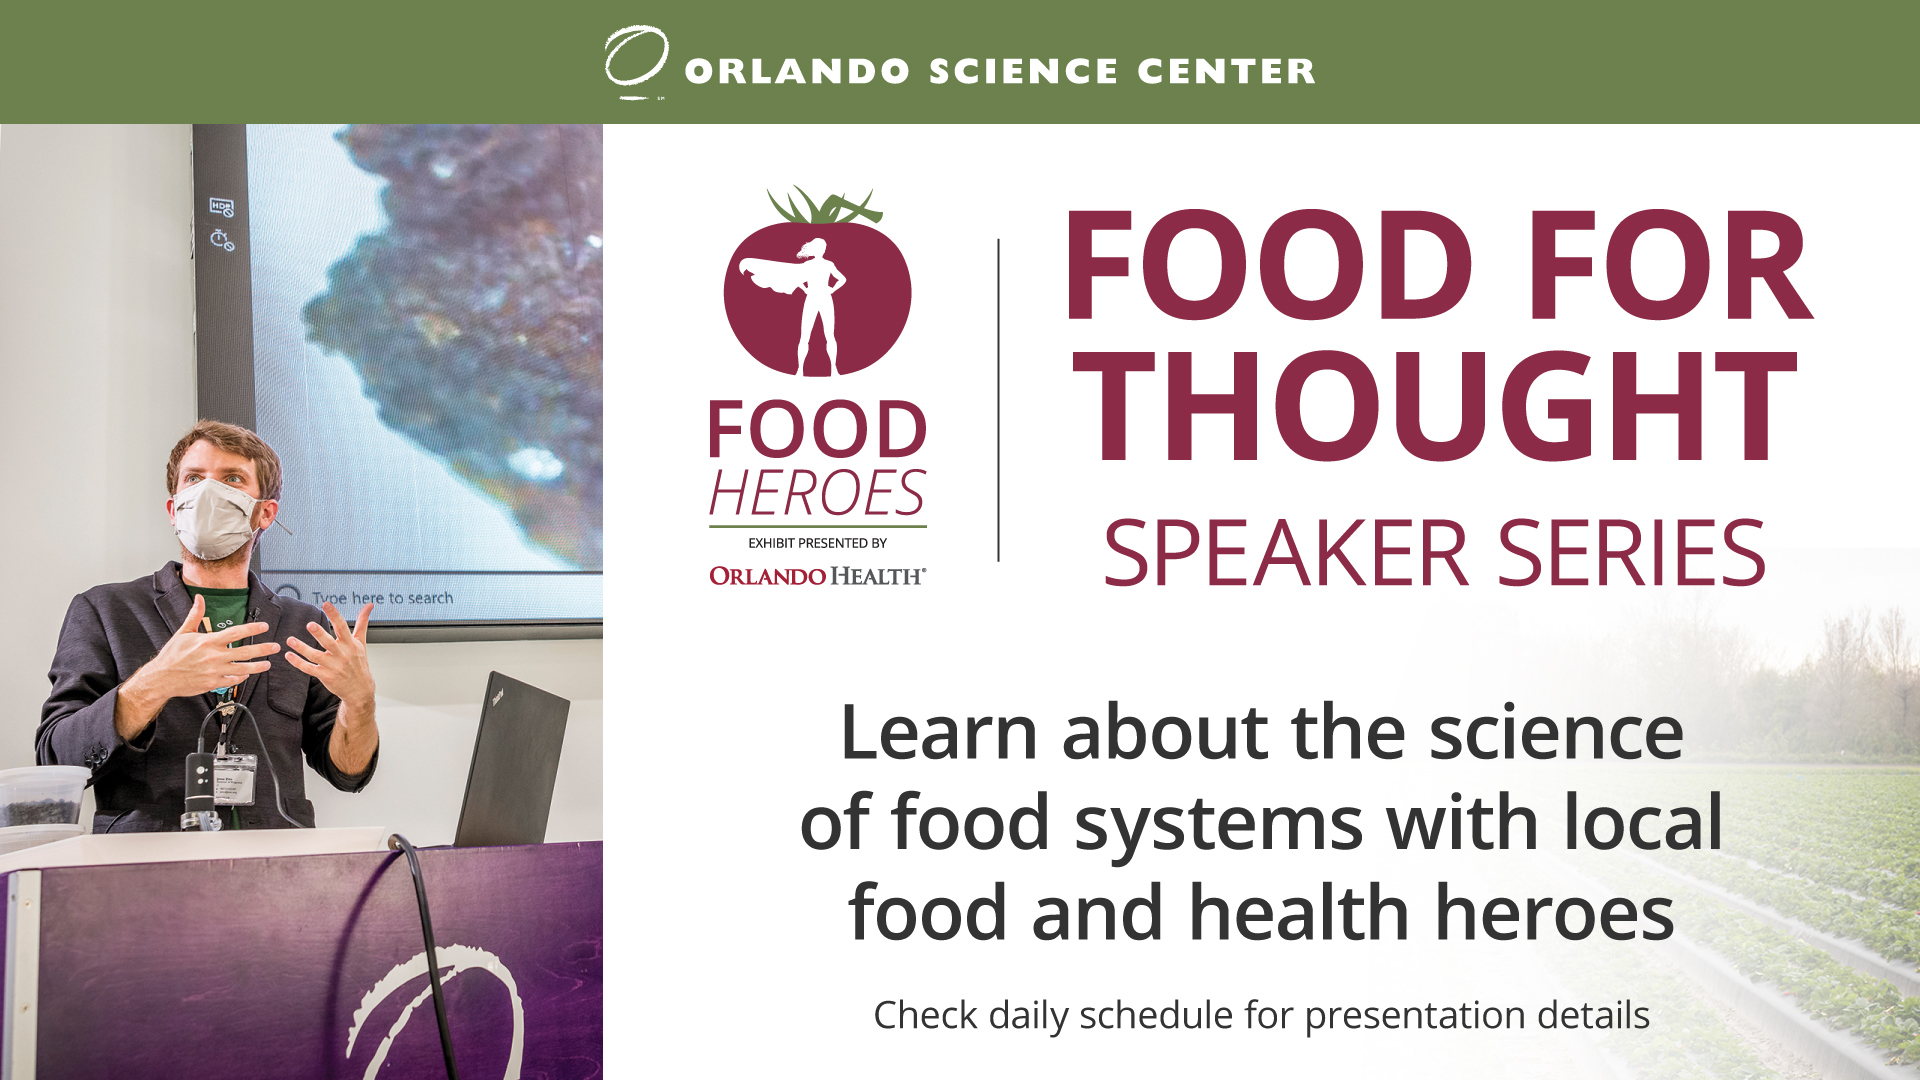 Food For Thought Speaker Series - image of presenter in Food Heroes exhibit